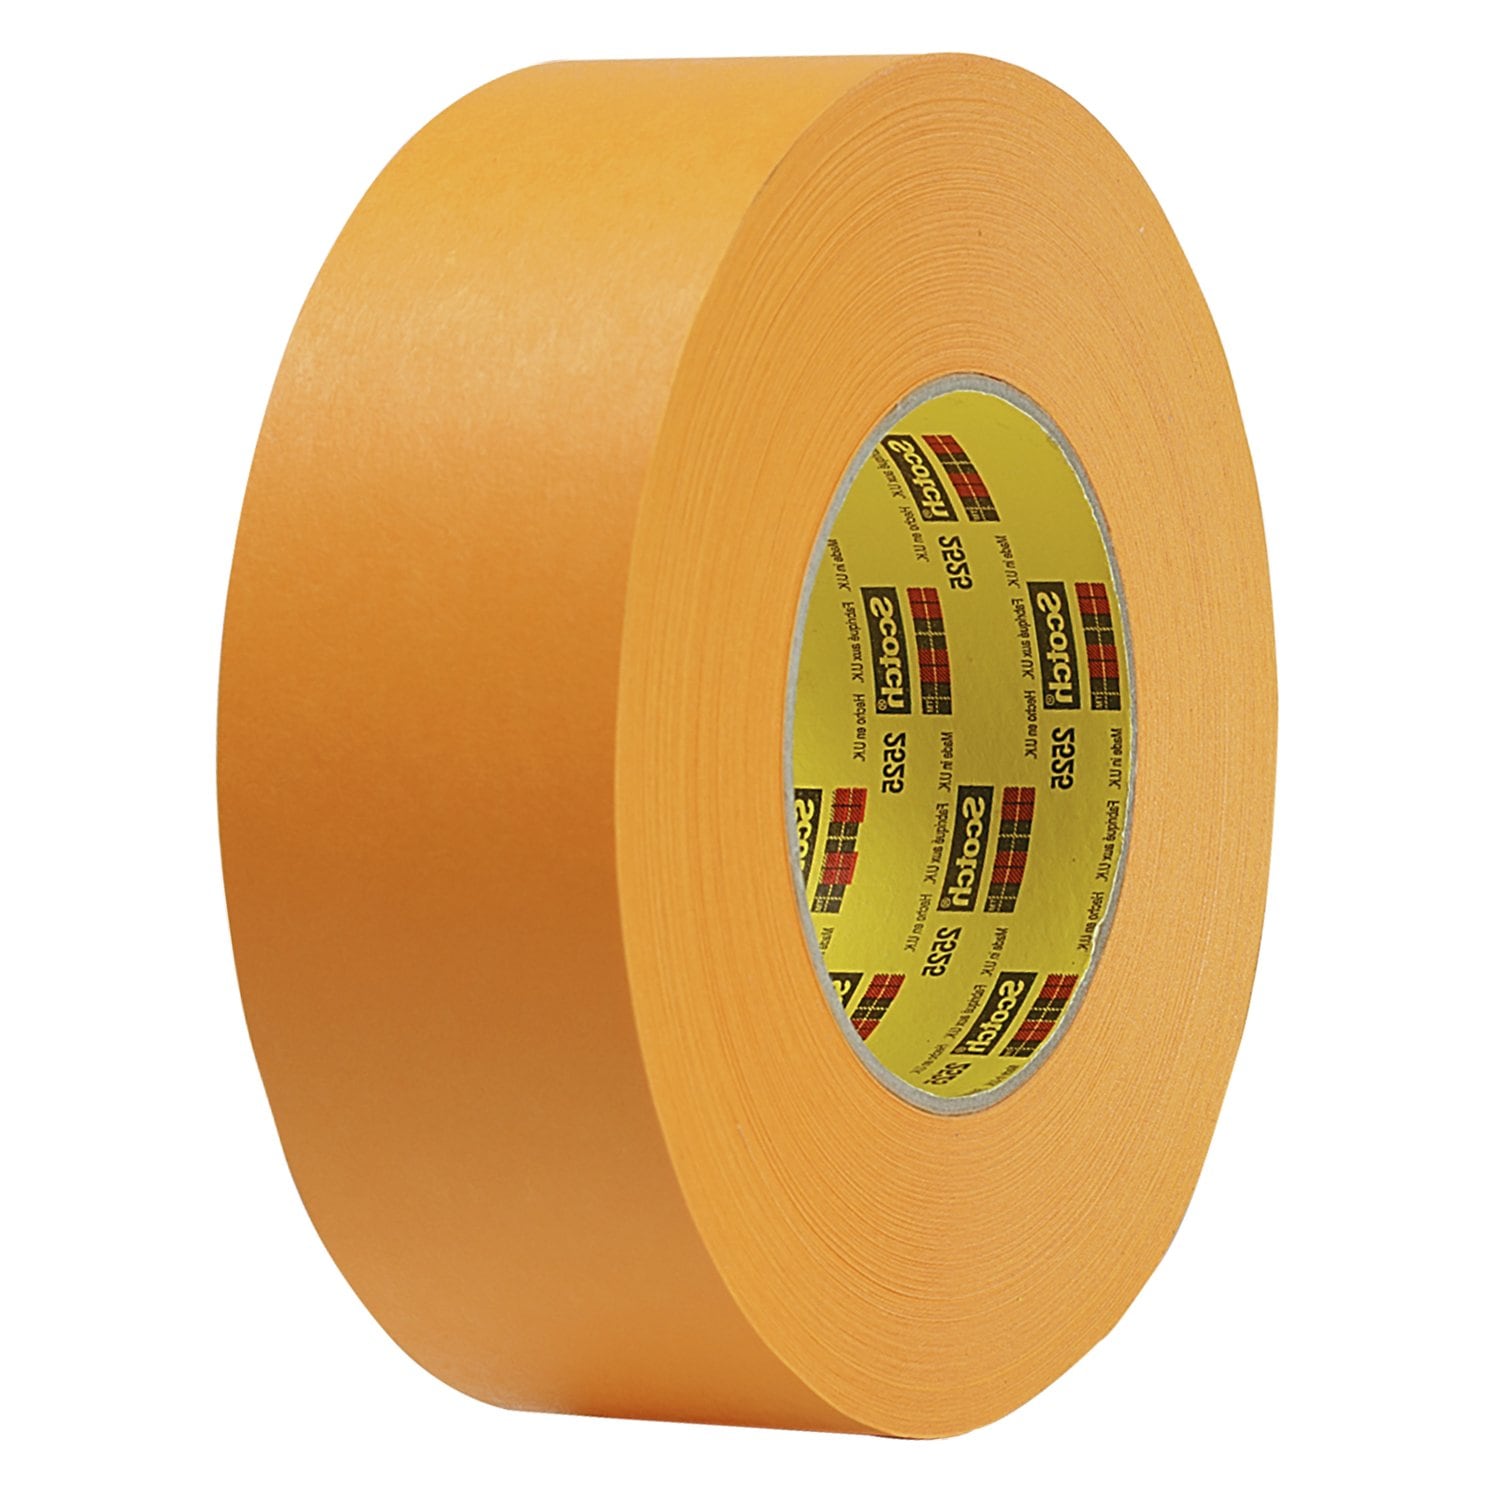 7000088507 - 3M Performance Flatback Tape 2525, Orange, 36 mm x 55 m, 9.5 mil, 24
Rolls/Case